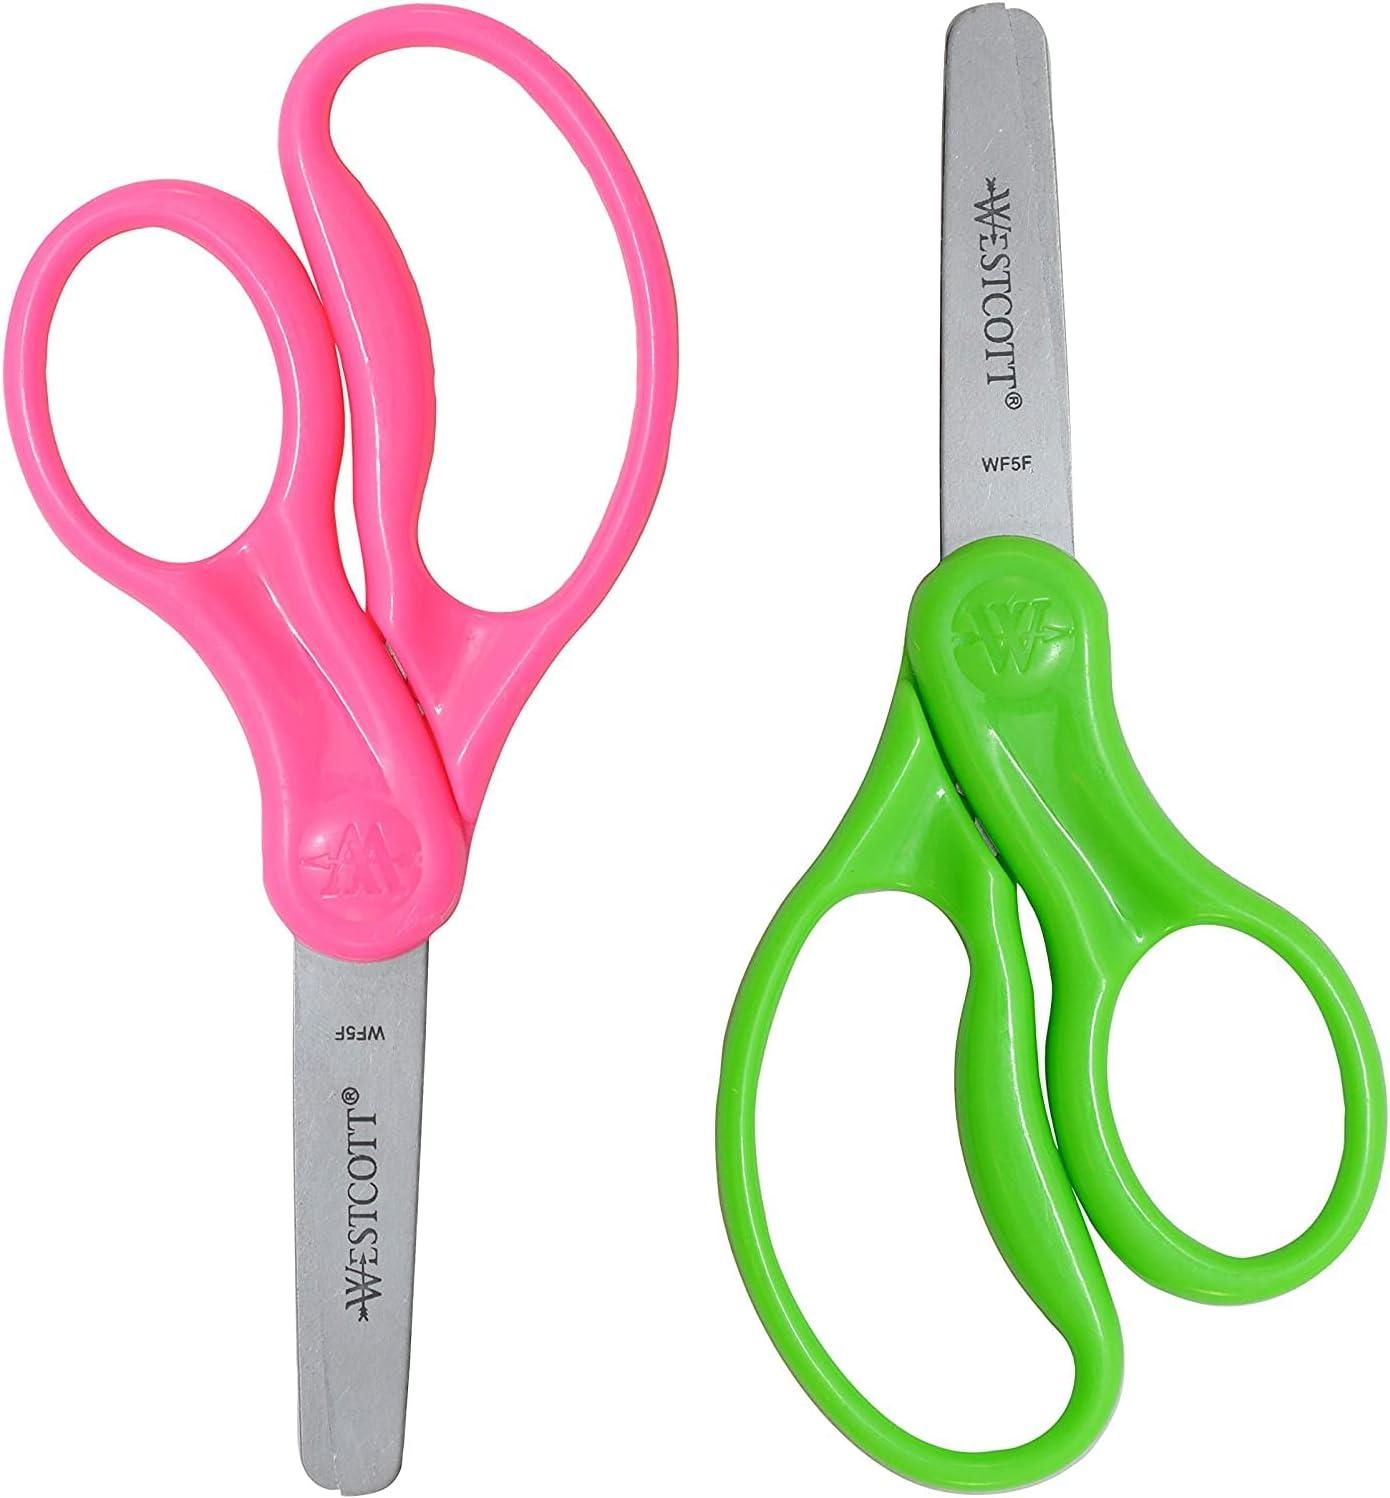 Westcott Right- & Left-Handed Scissors For Kids, 5'' Blunt Safety